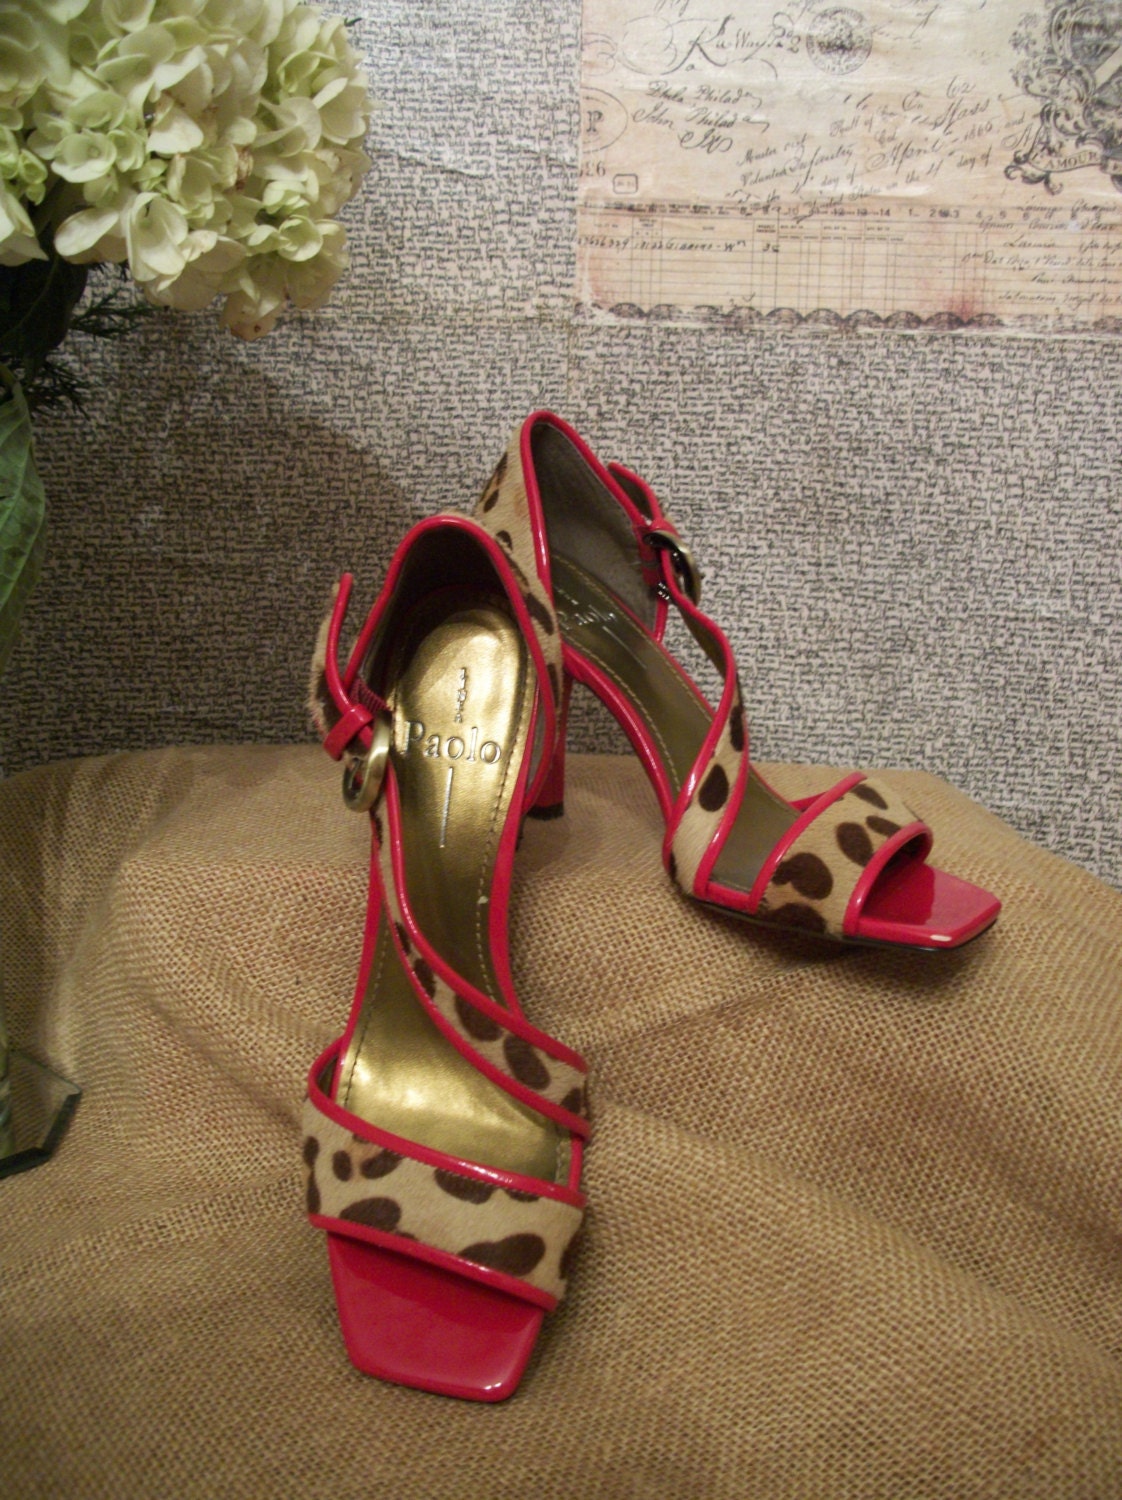 Ladies Linea Paolo Shoes Size 7.5 Medium.